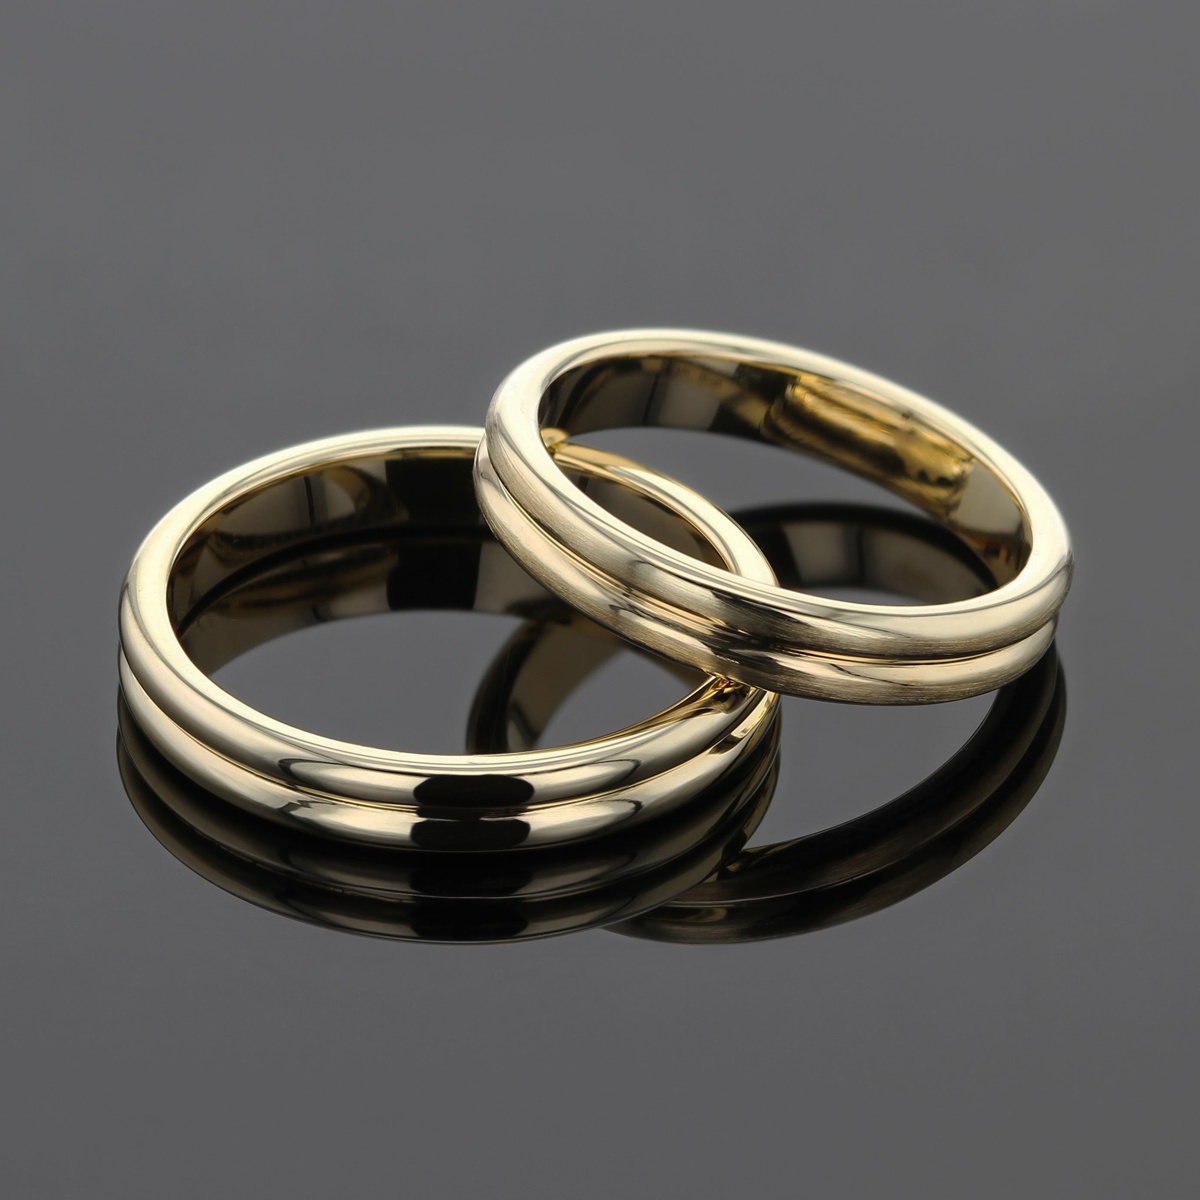 Mauritius wedding rings